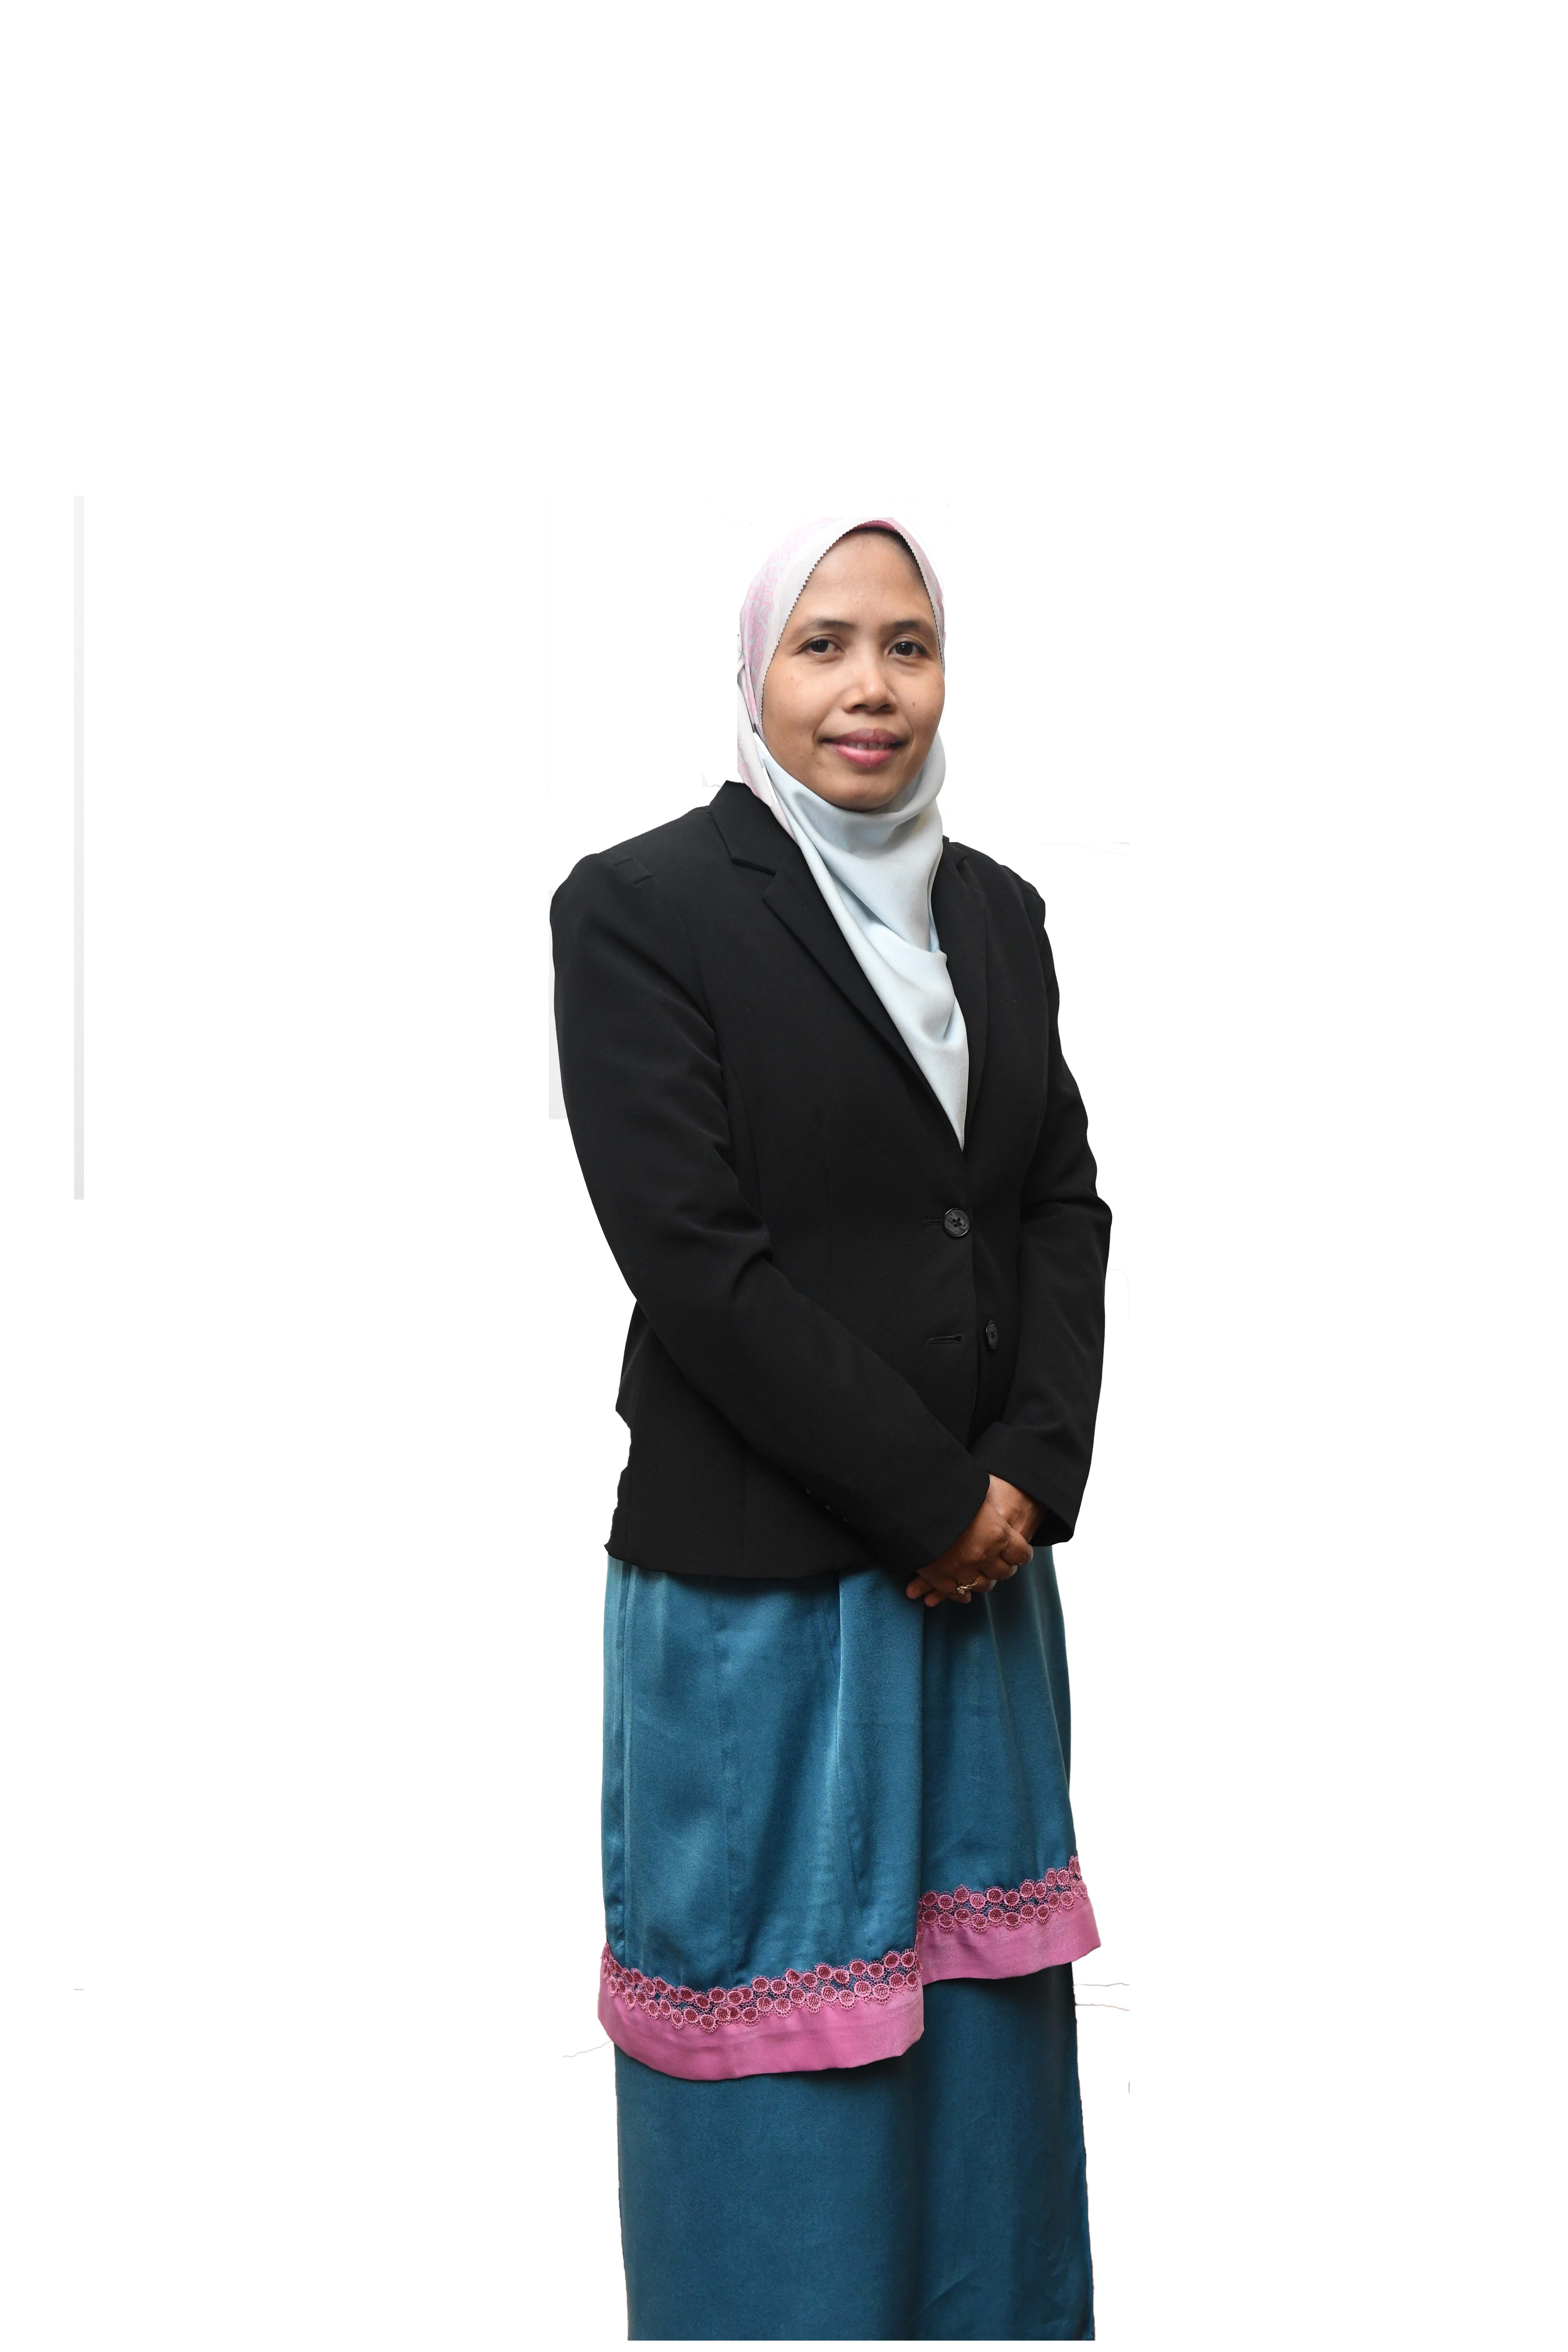 Prof. Madya Dr. Noor Azlina Binti Ibrahim